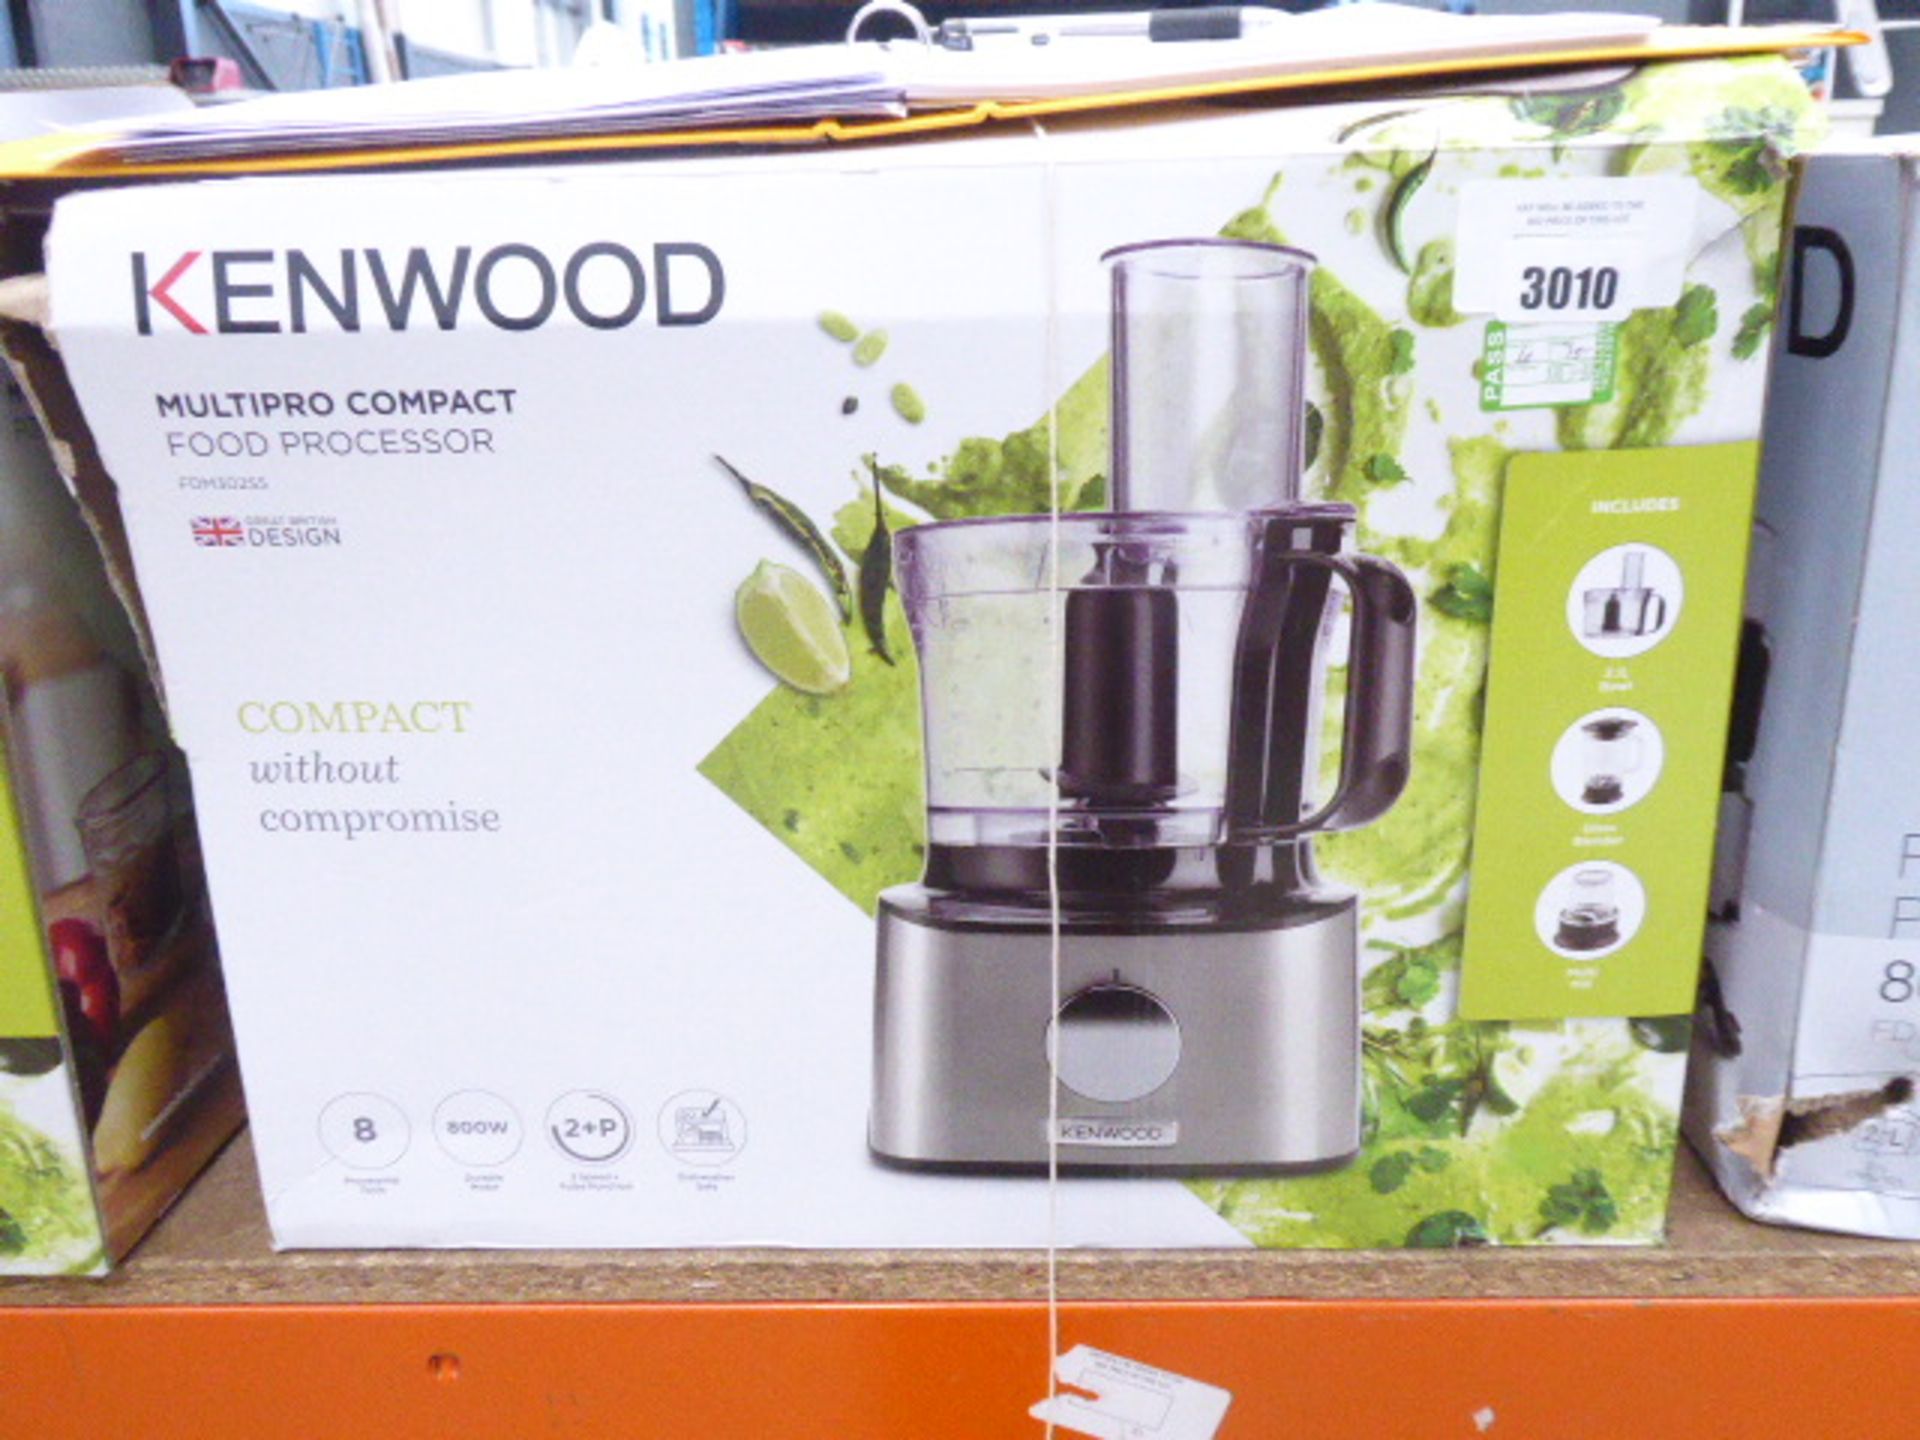 3010 Kenwood food processor